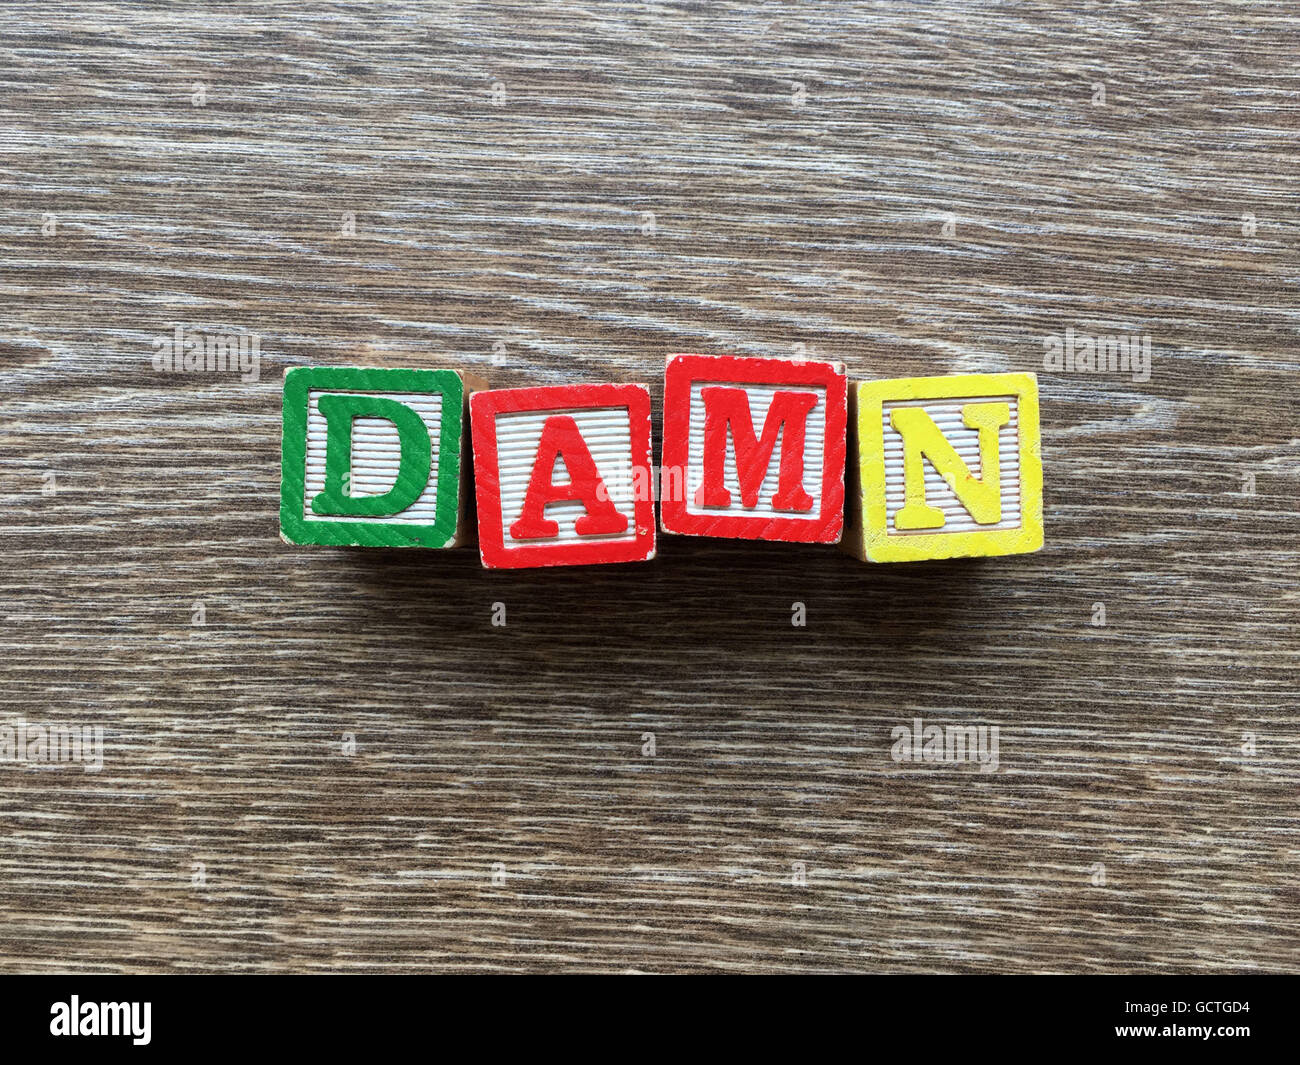 Maldita palabra escrita con un bloque de madera carta juguetes Foto de stock